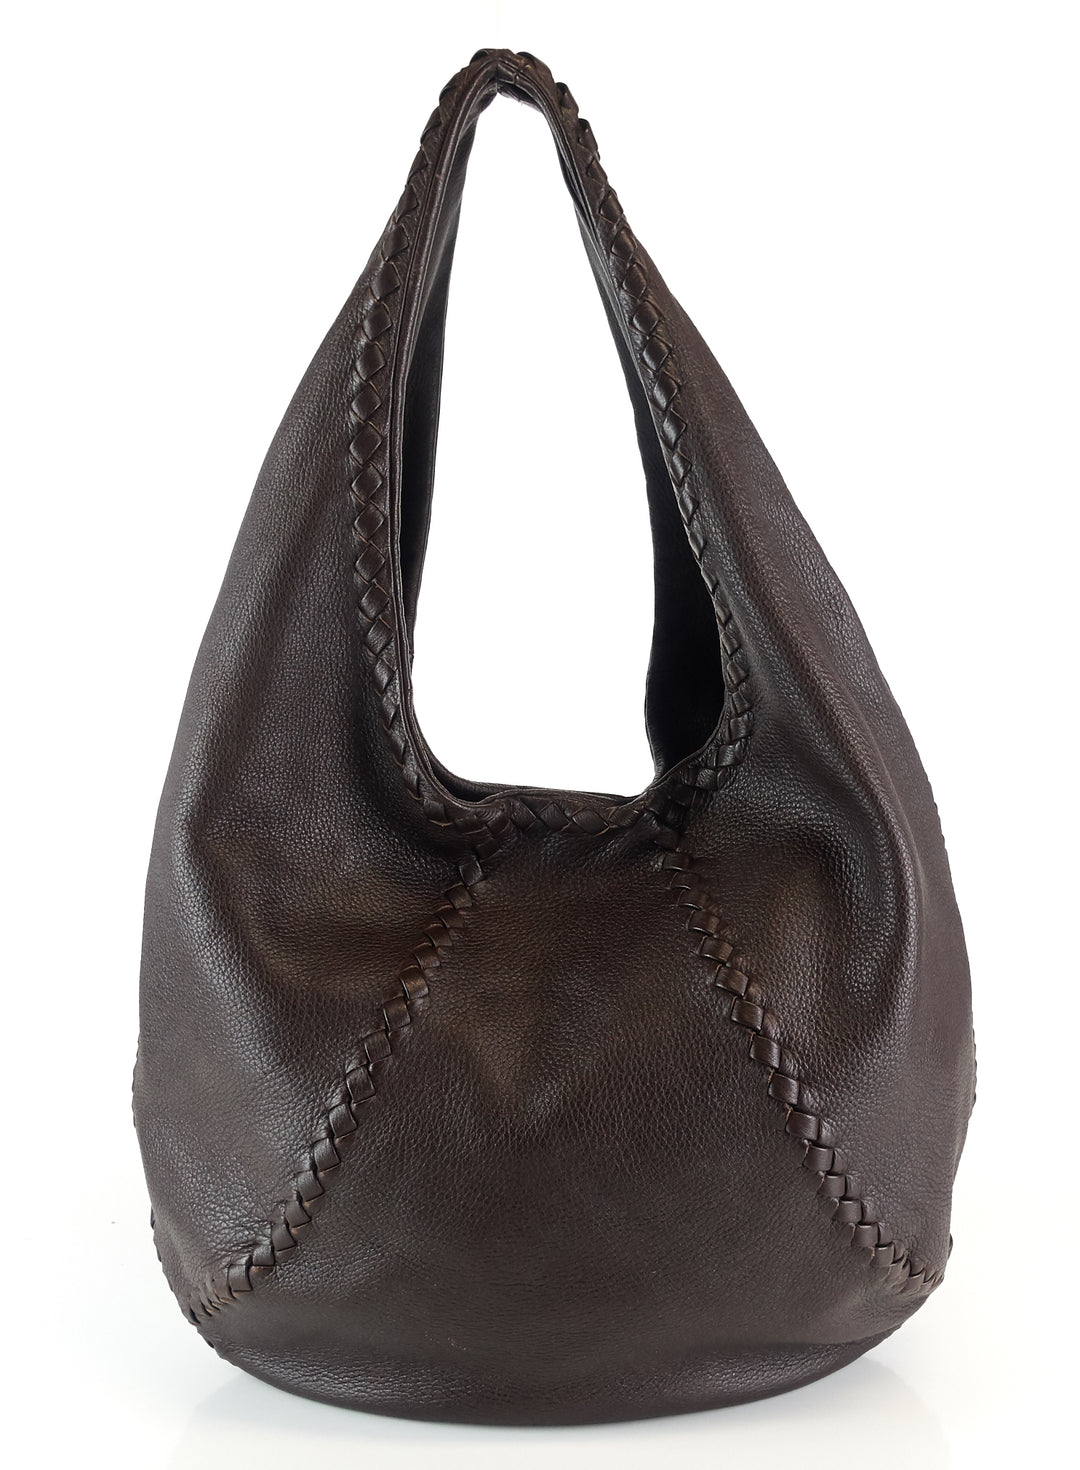 mallow cervo leather hobo bag